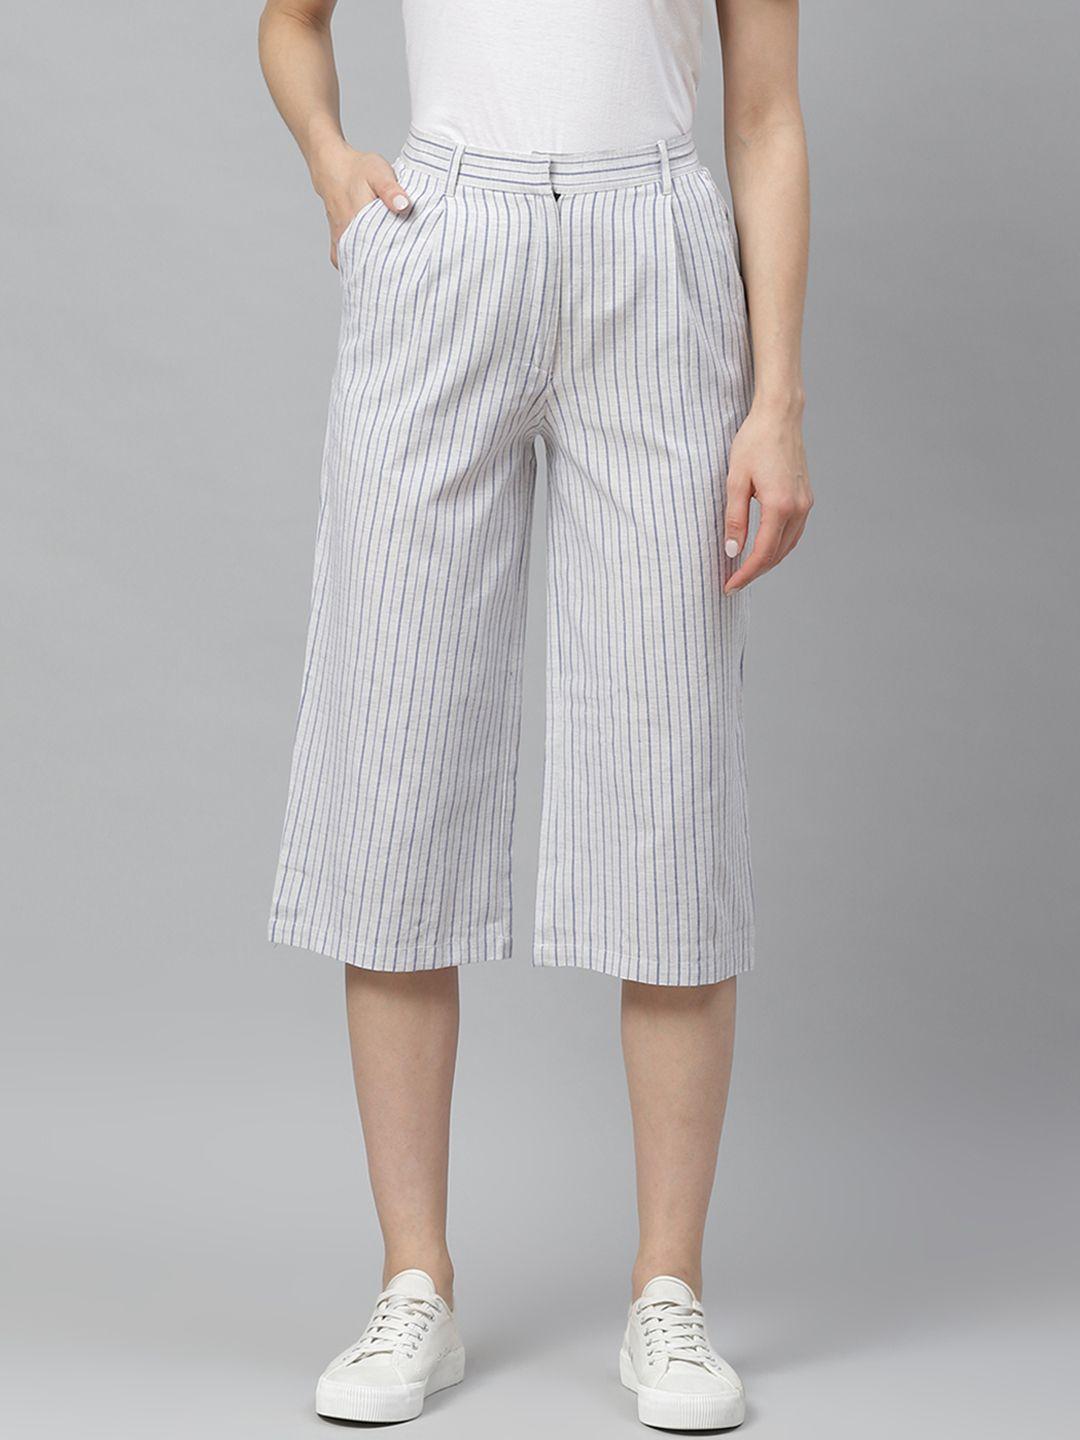 myshka women off-white & blue striped regular fit culottes